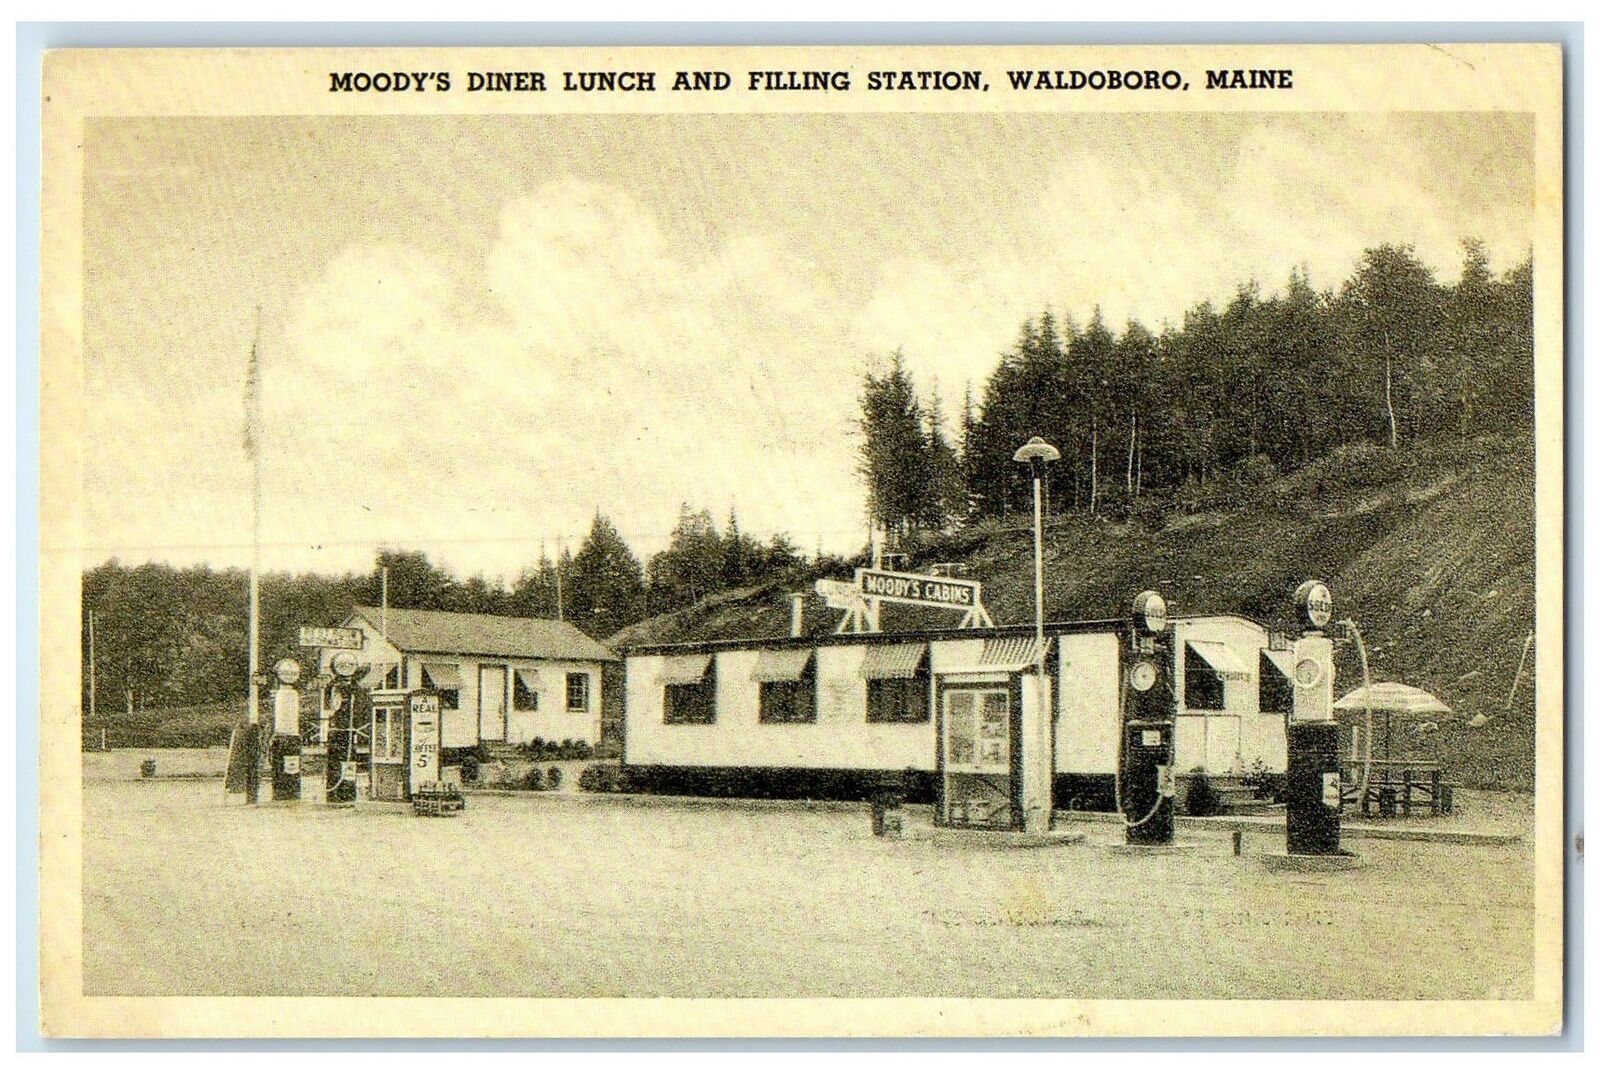 c1940's Moody's Diner Lunch Restaurant Filling Station Waldoboro Maine Postcard